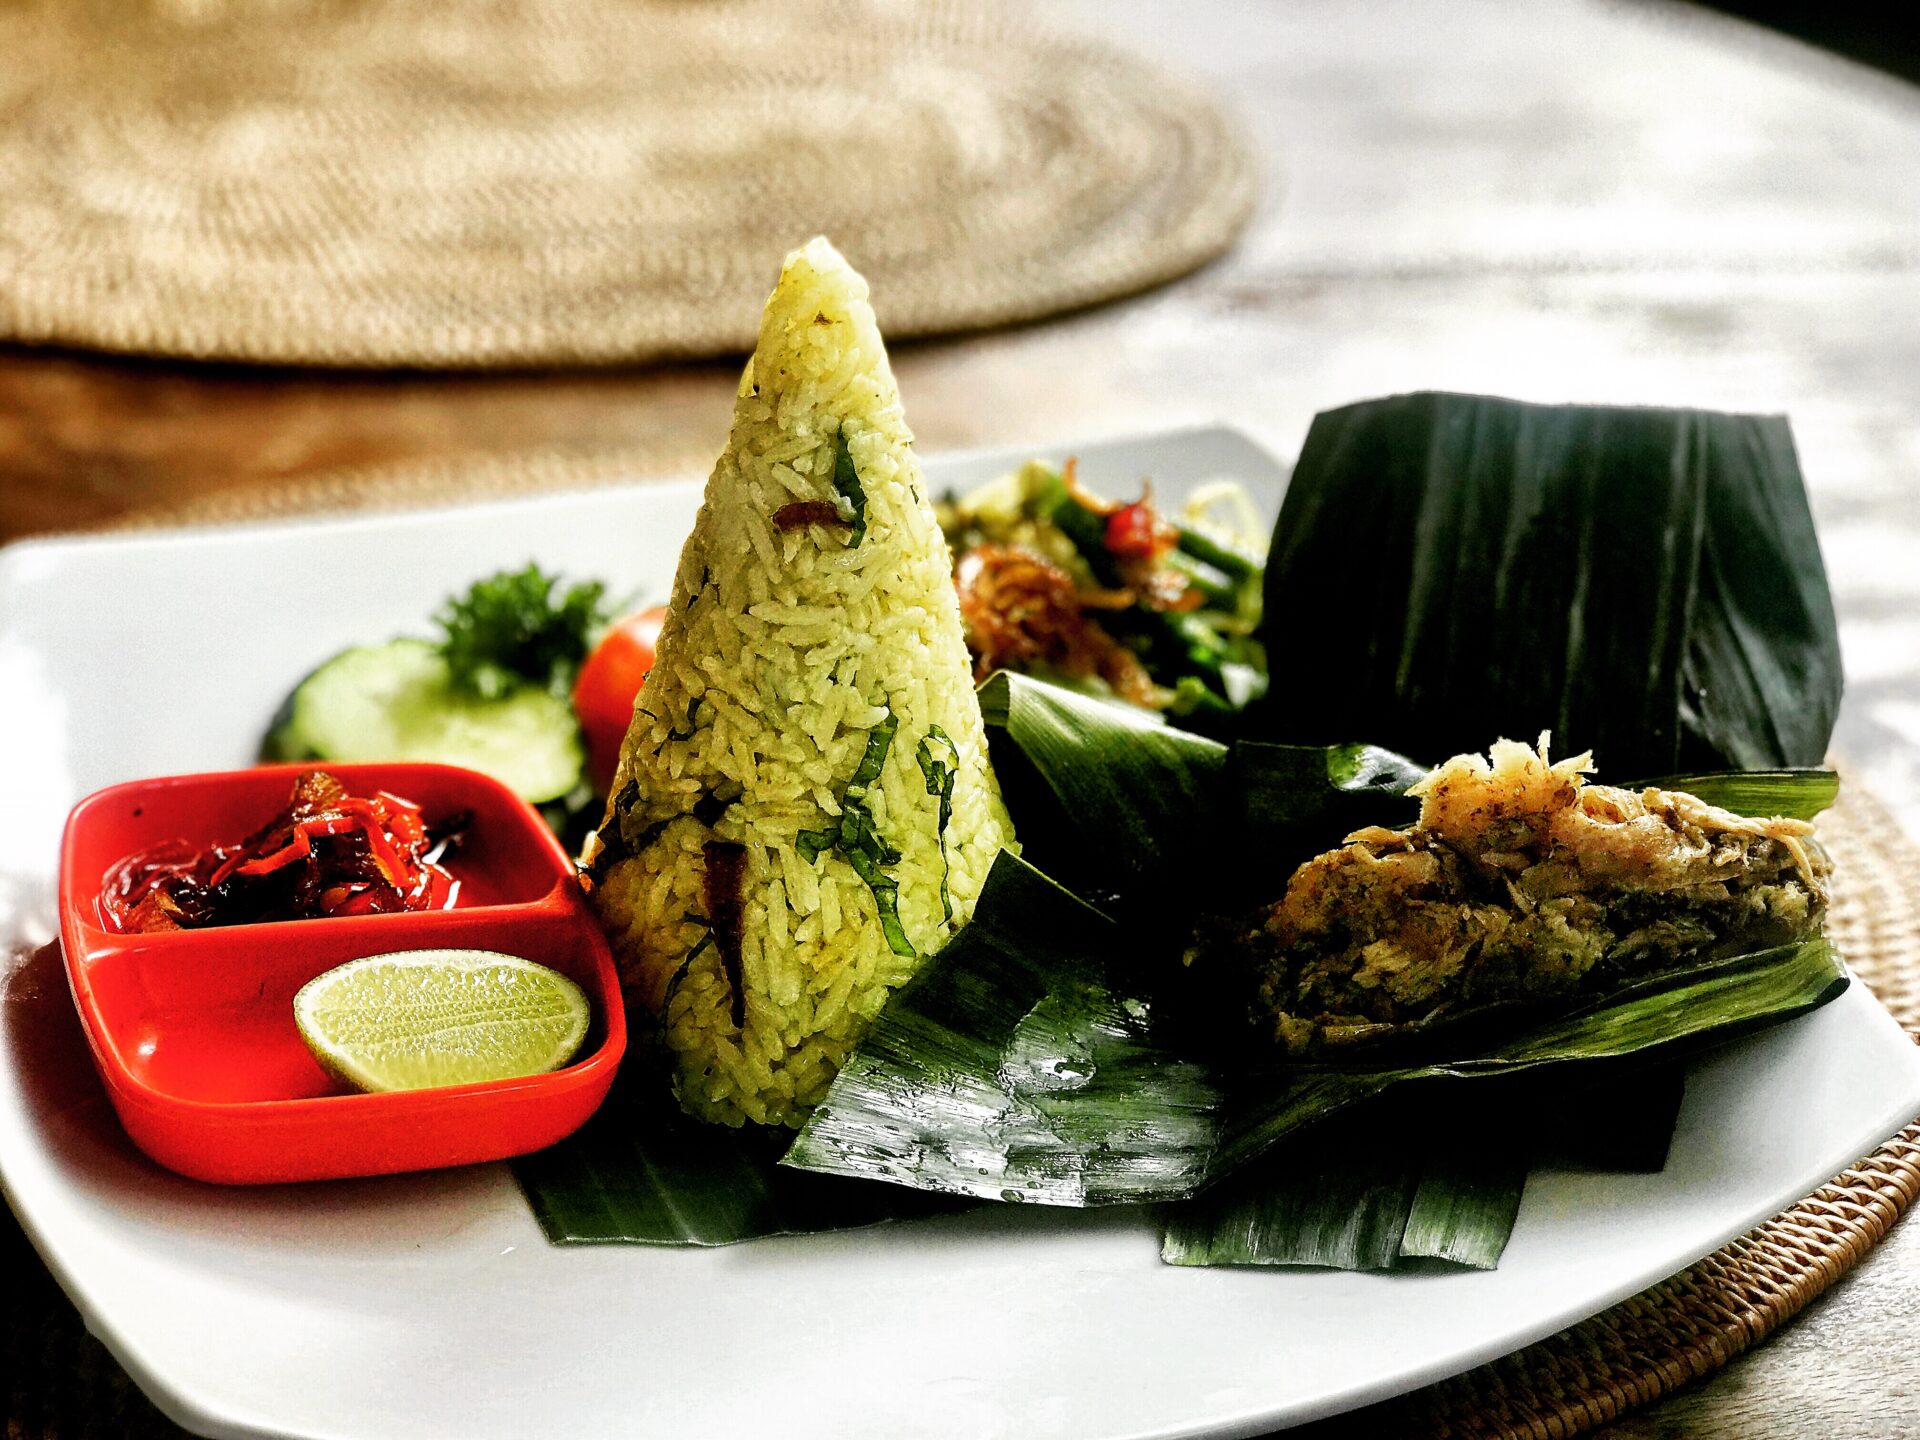 My Favorite Ubud Restaurants: The Ultimate Bali Food Guide